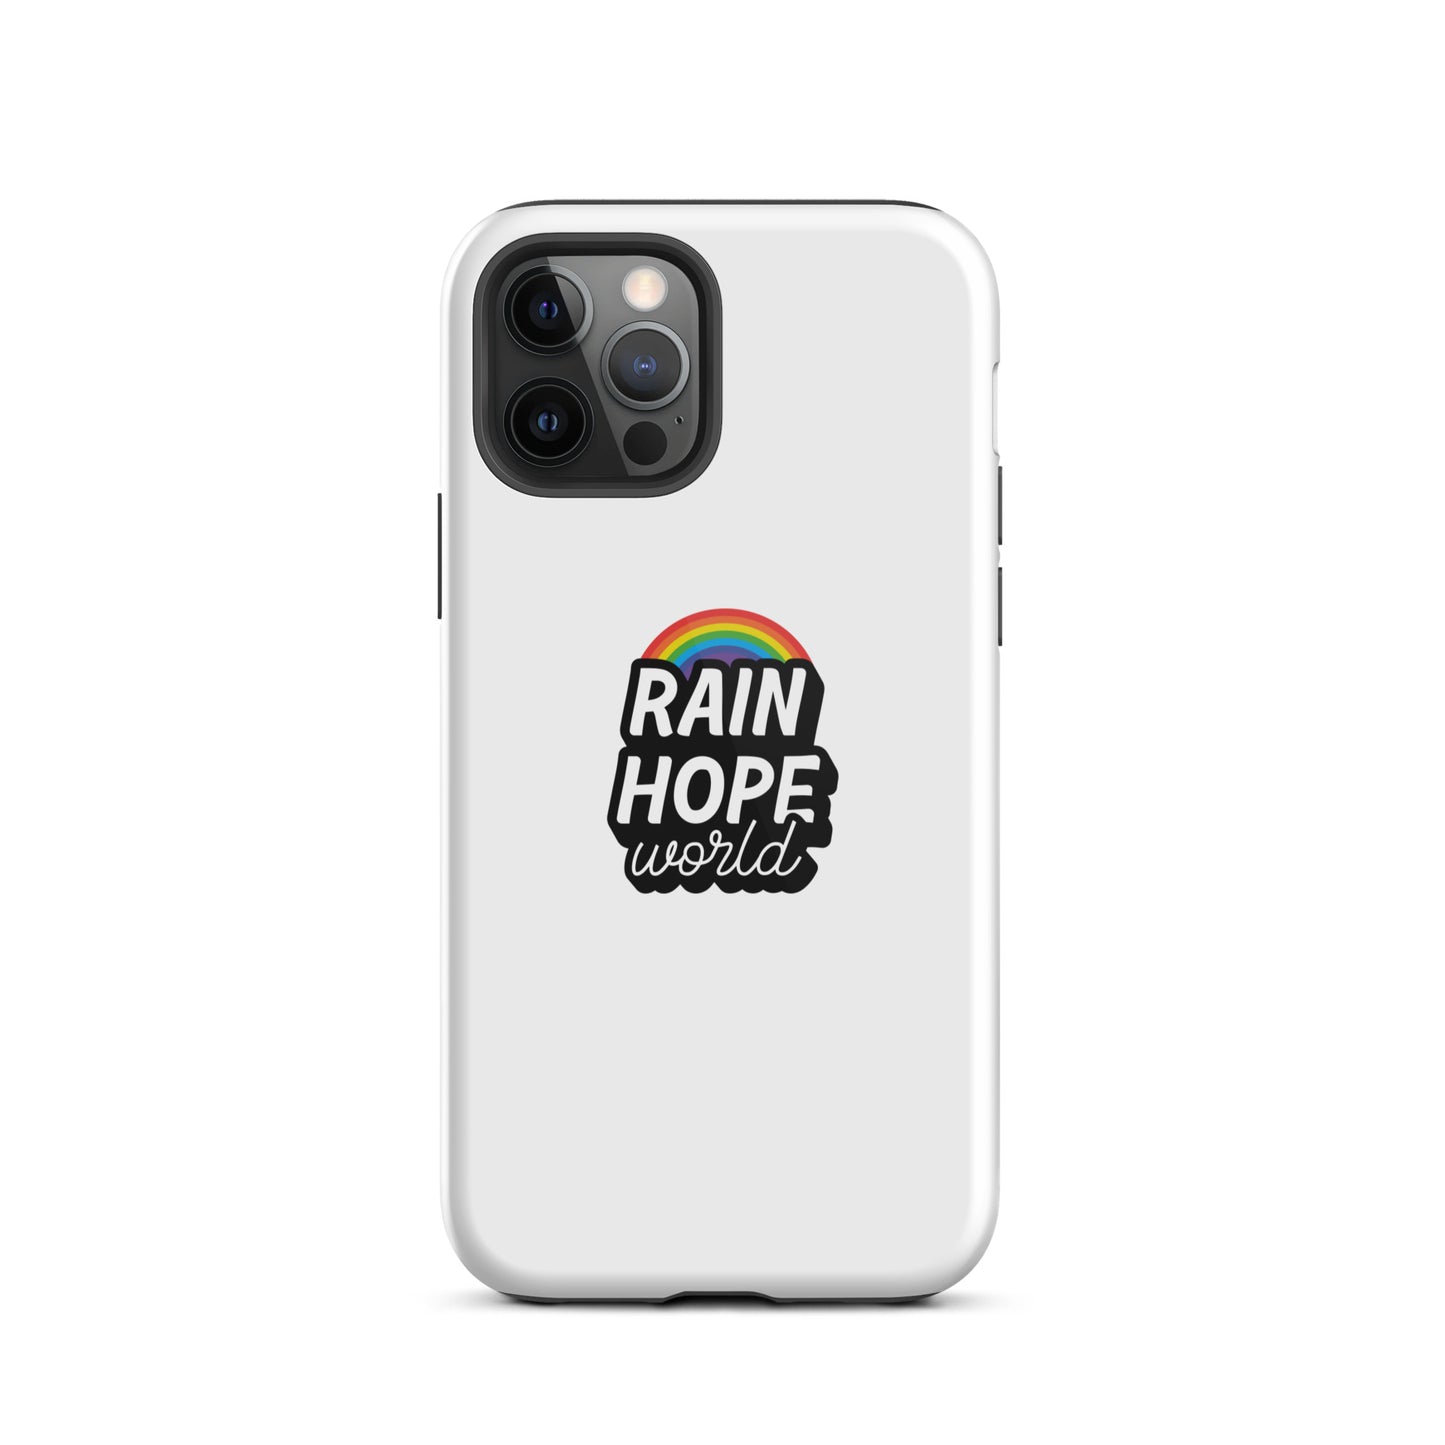 Rain Hope World Tough iPhone case